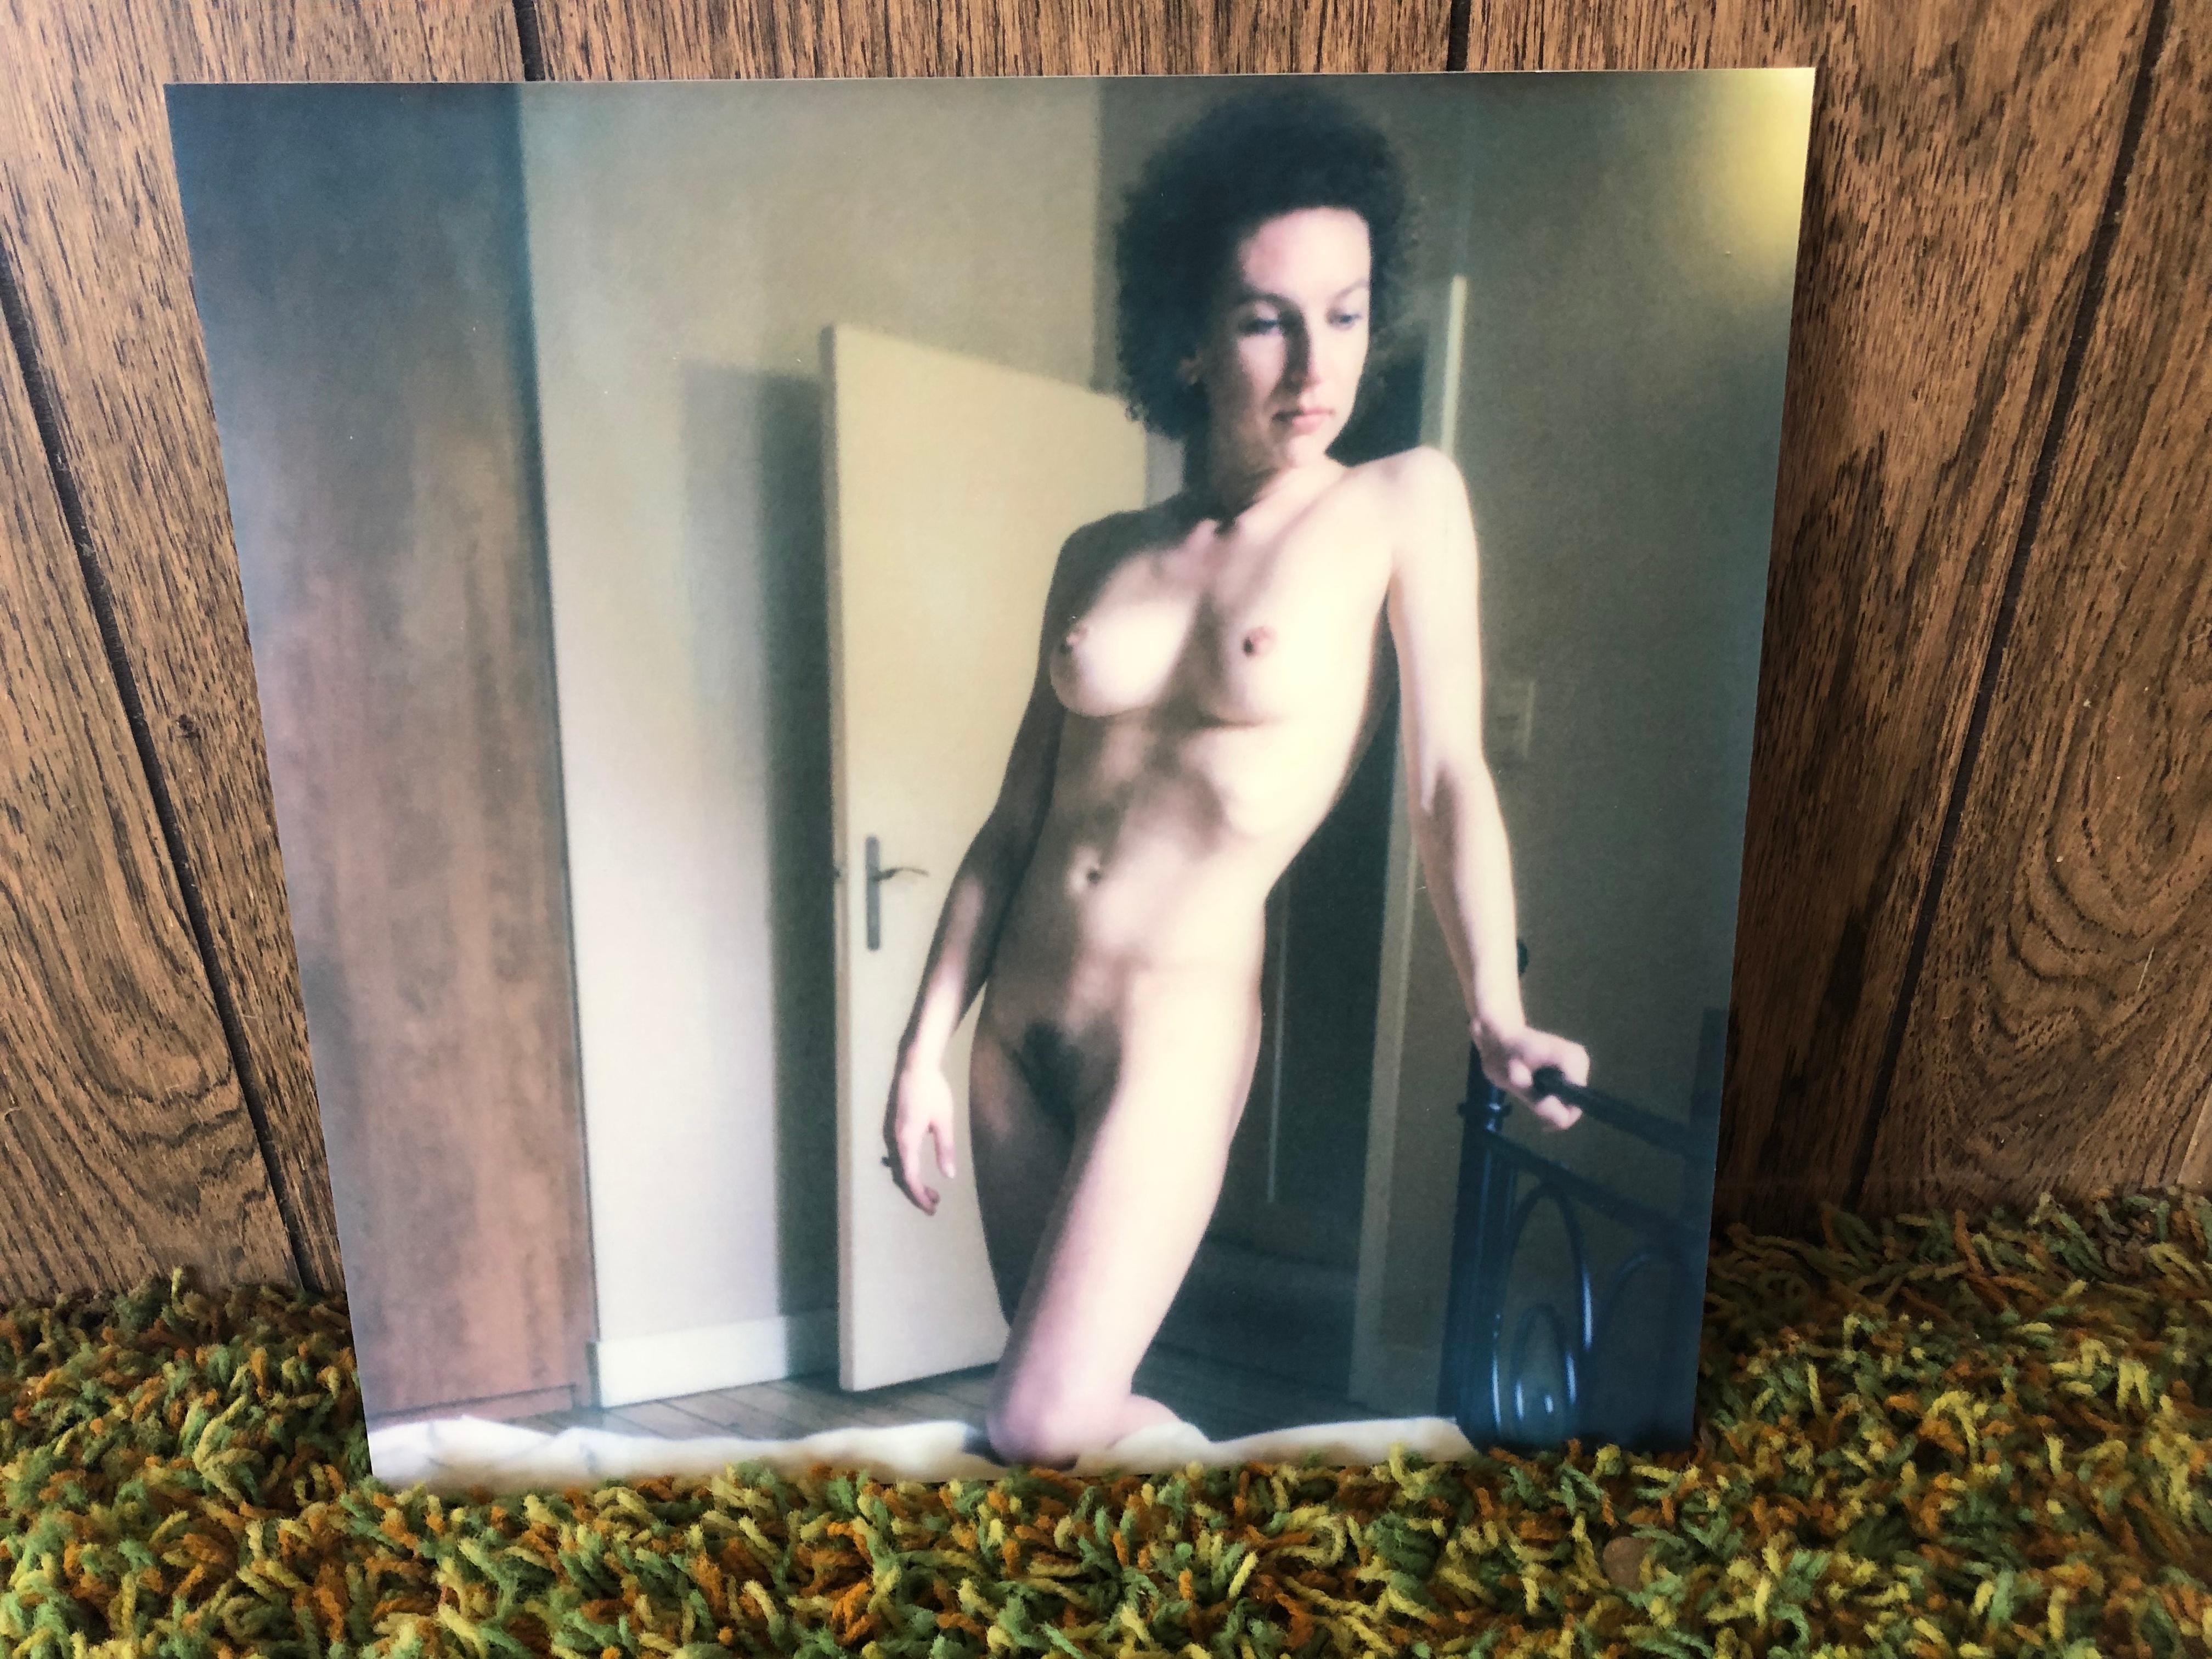 Missing, 50x50cm, 21st Century, Polaroid, Nude Photography 3